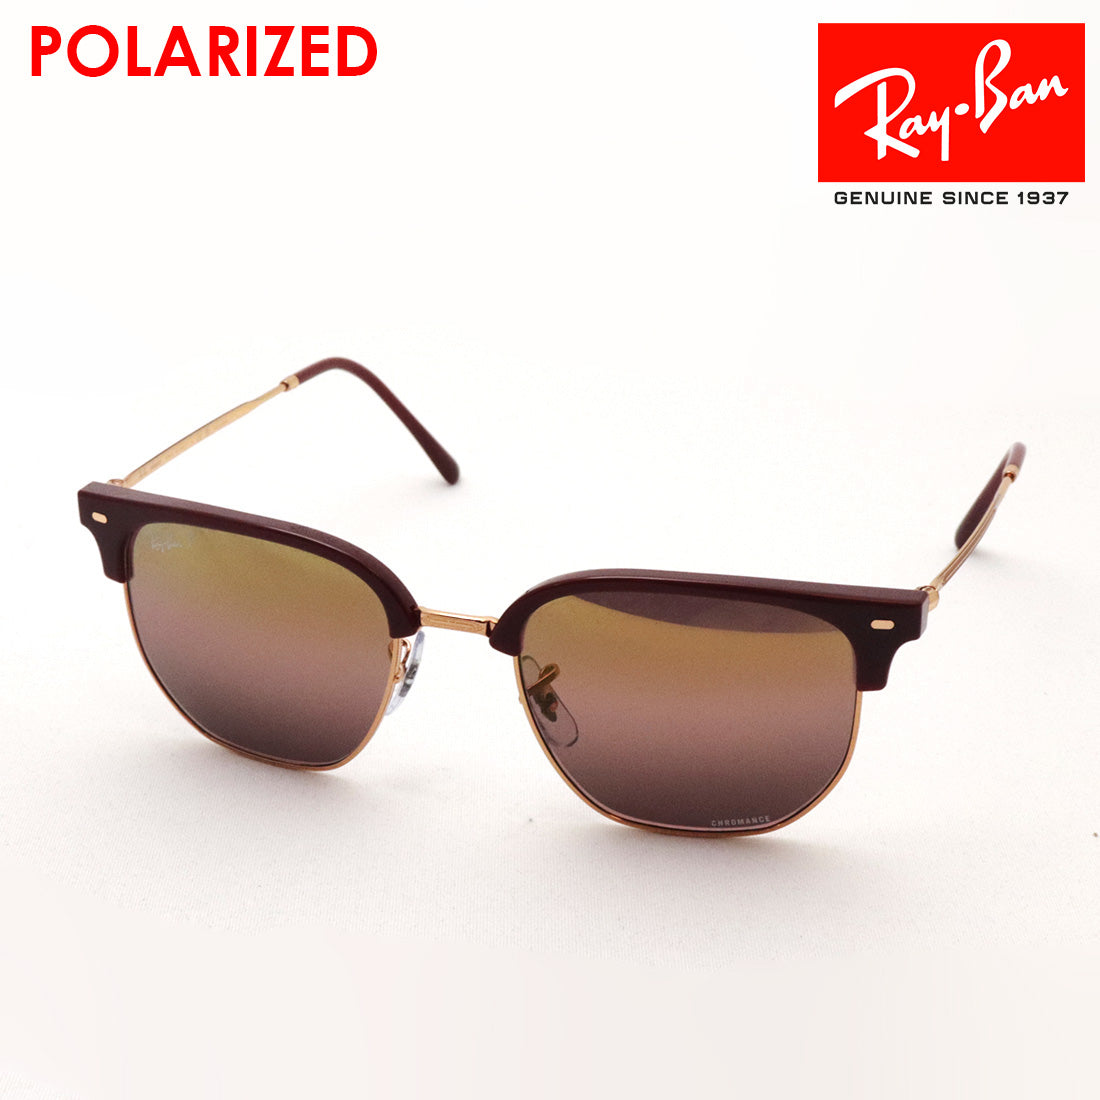 Ray-Ban Polarized Sunglasses Ray-Ban RB3692D 06581 